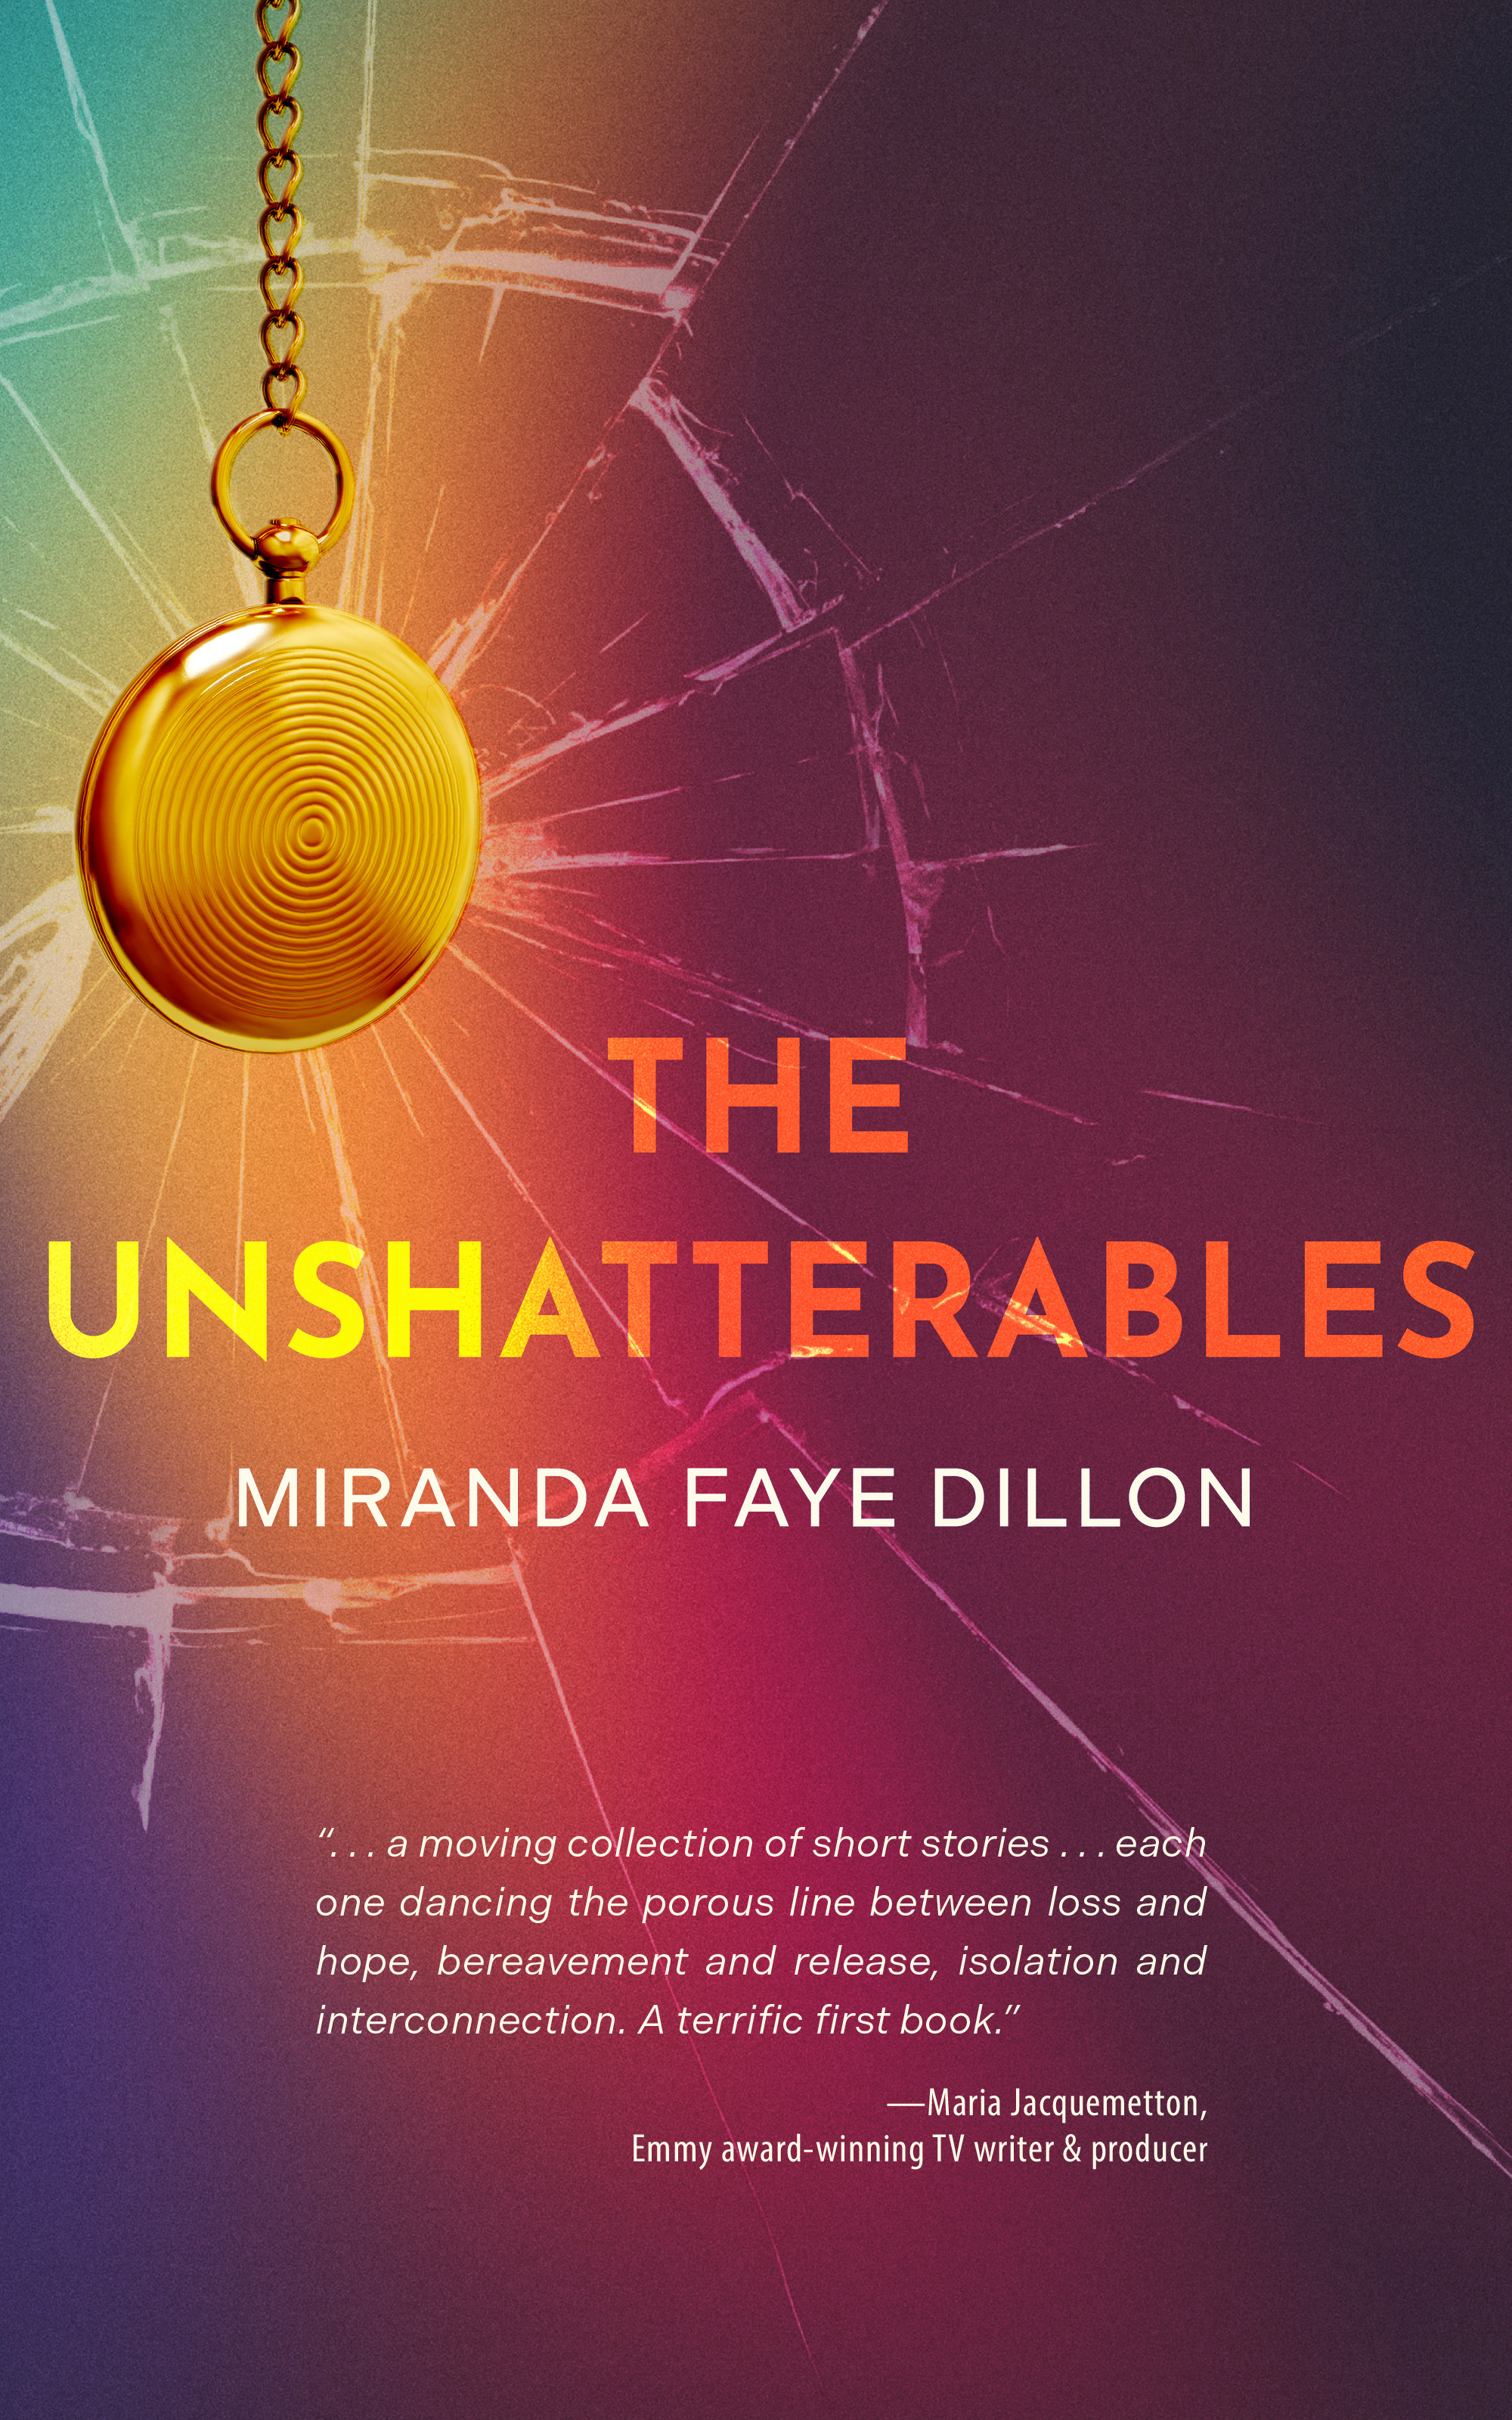 The Unshatterables, written by Miranda Dillon (book cover)